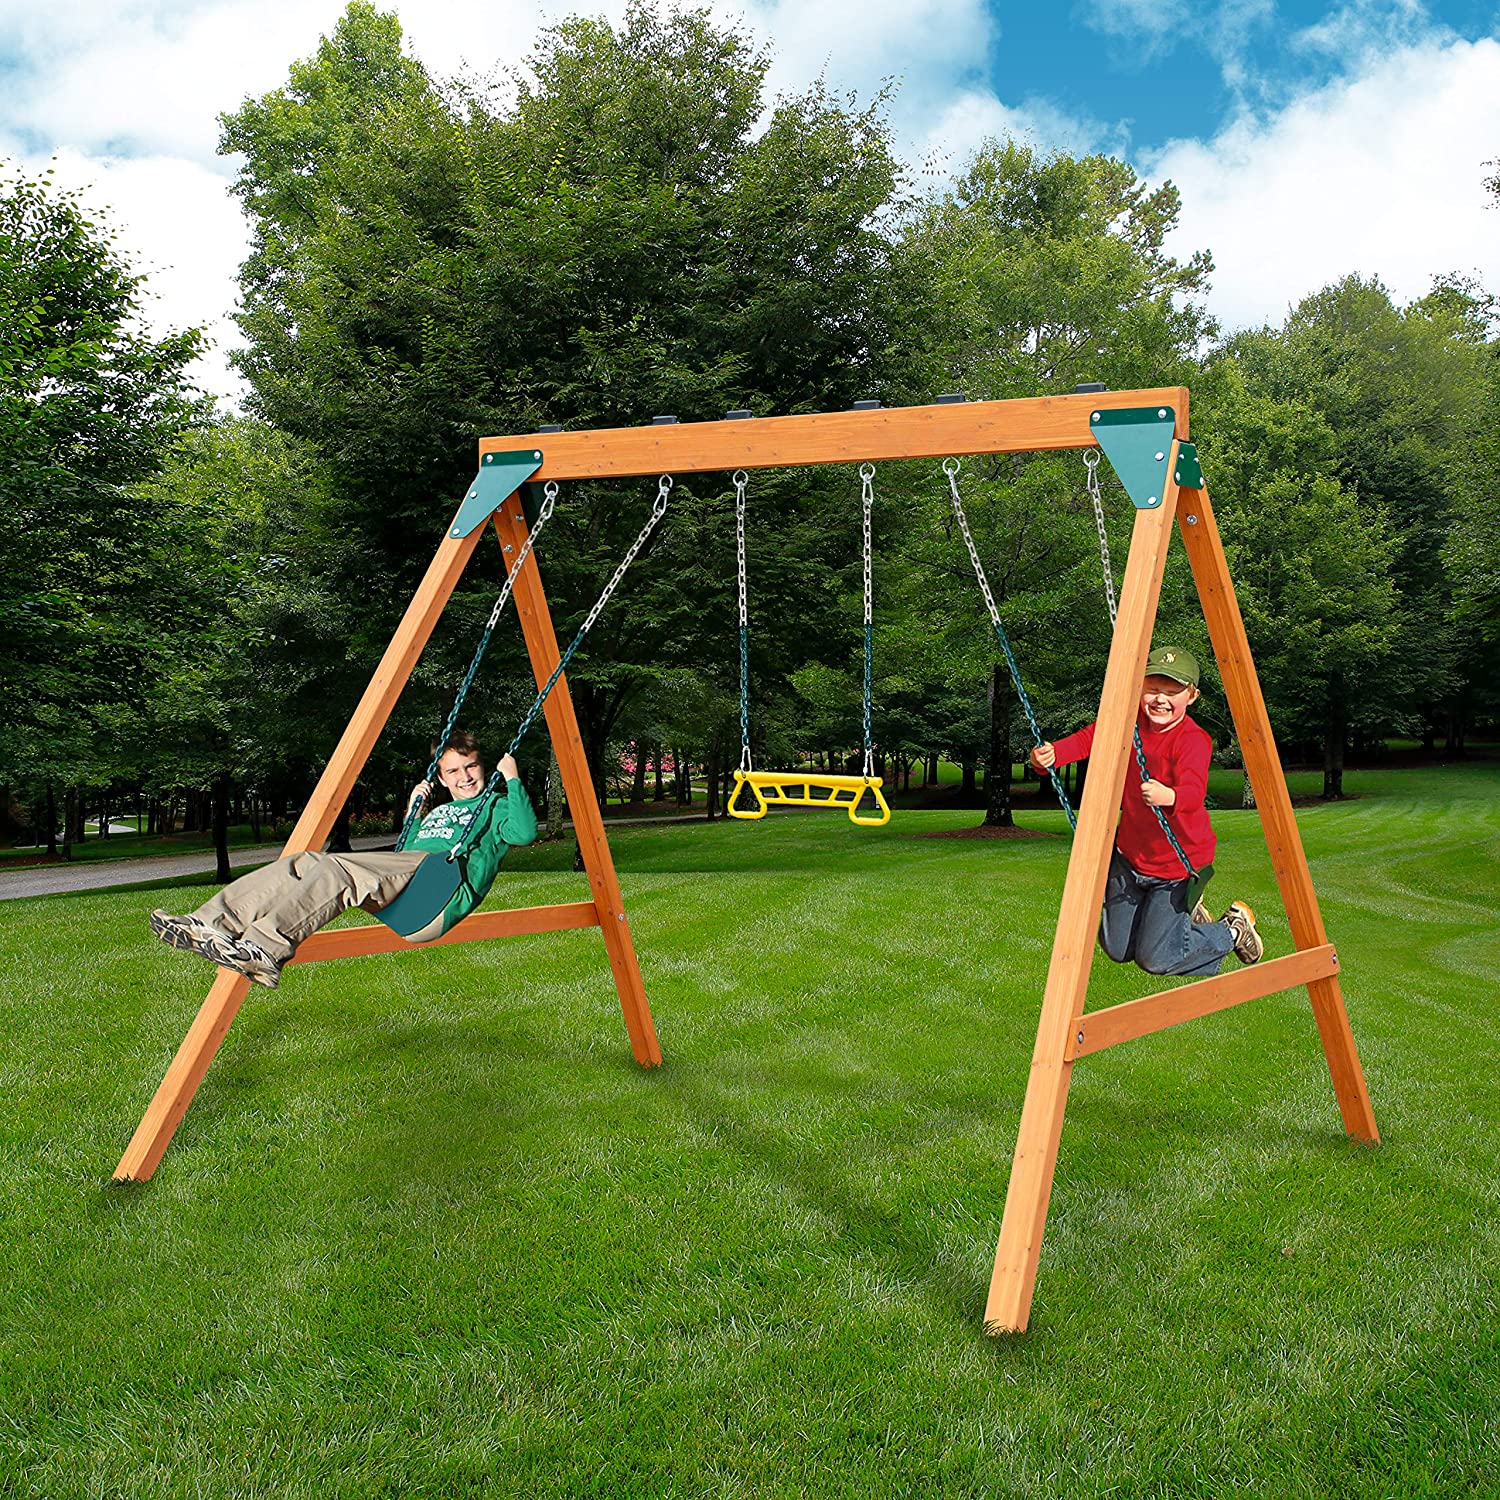 6 IN 1 Fun Swing Set Kids Playground Slide Outdoor Backyard Space Saver Play y6 